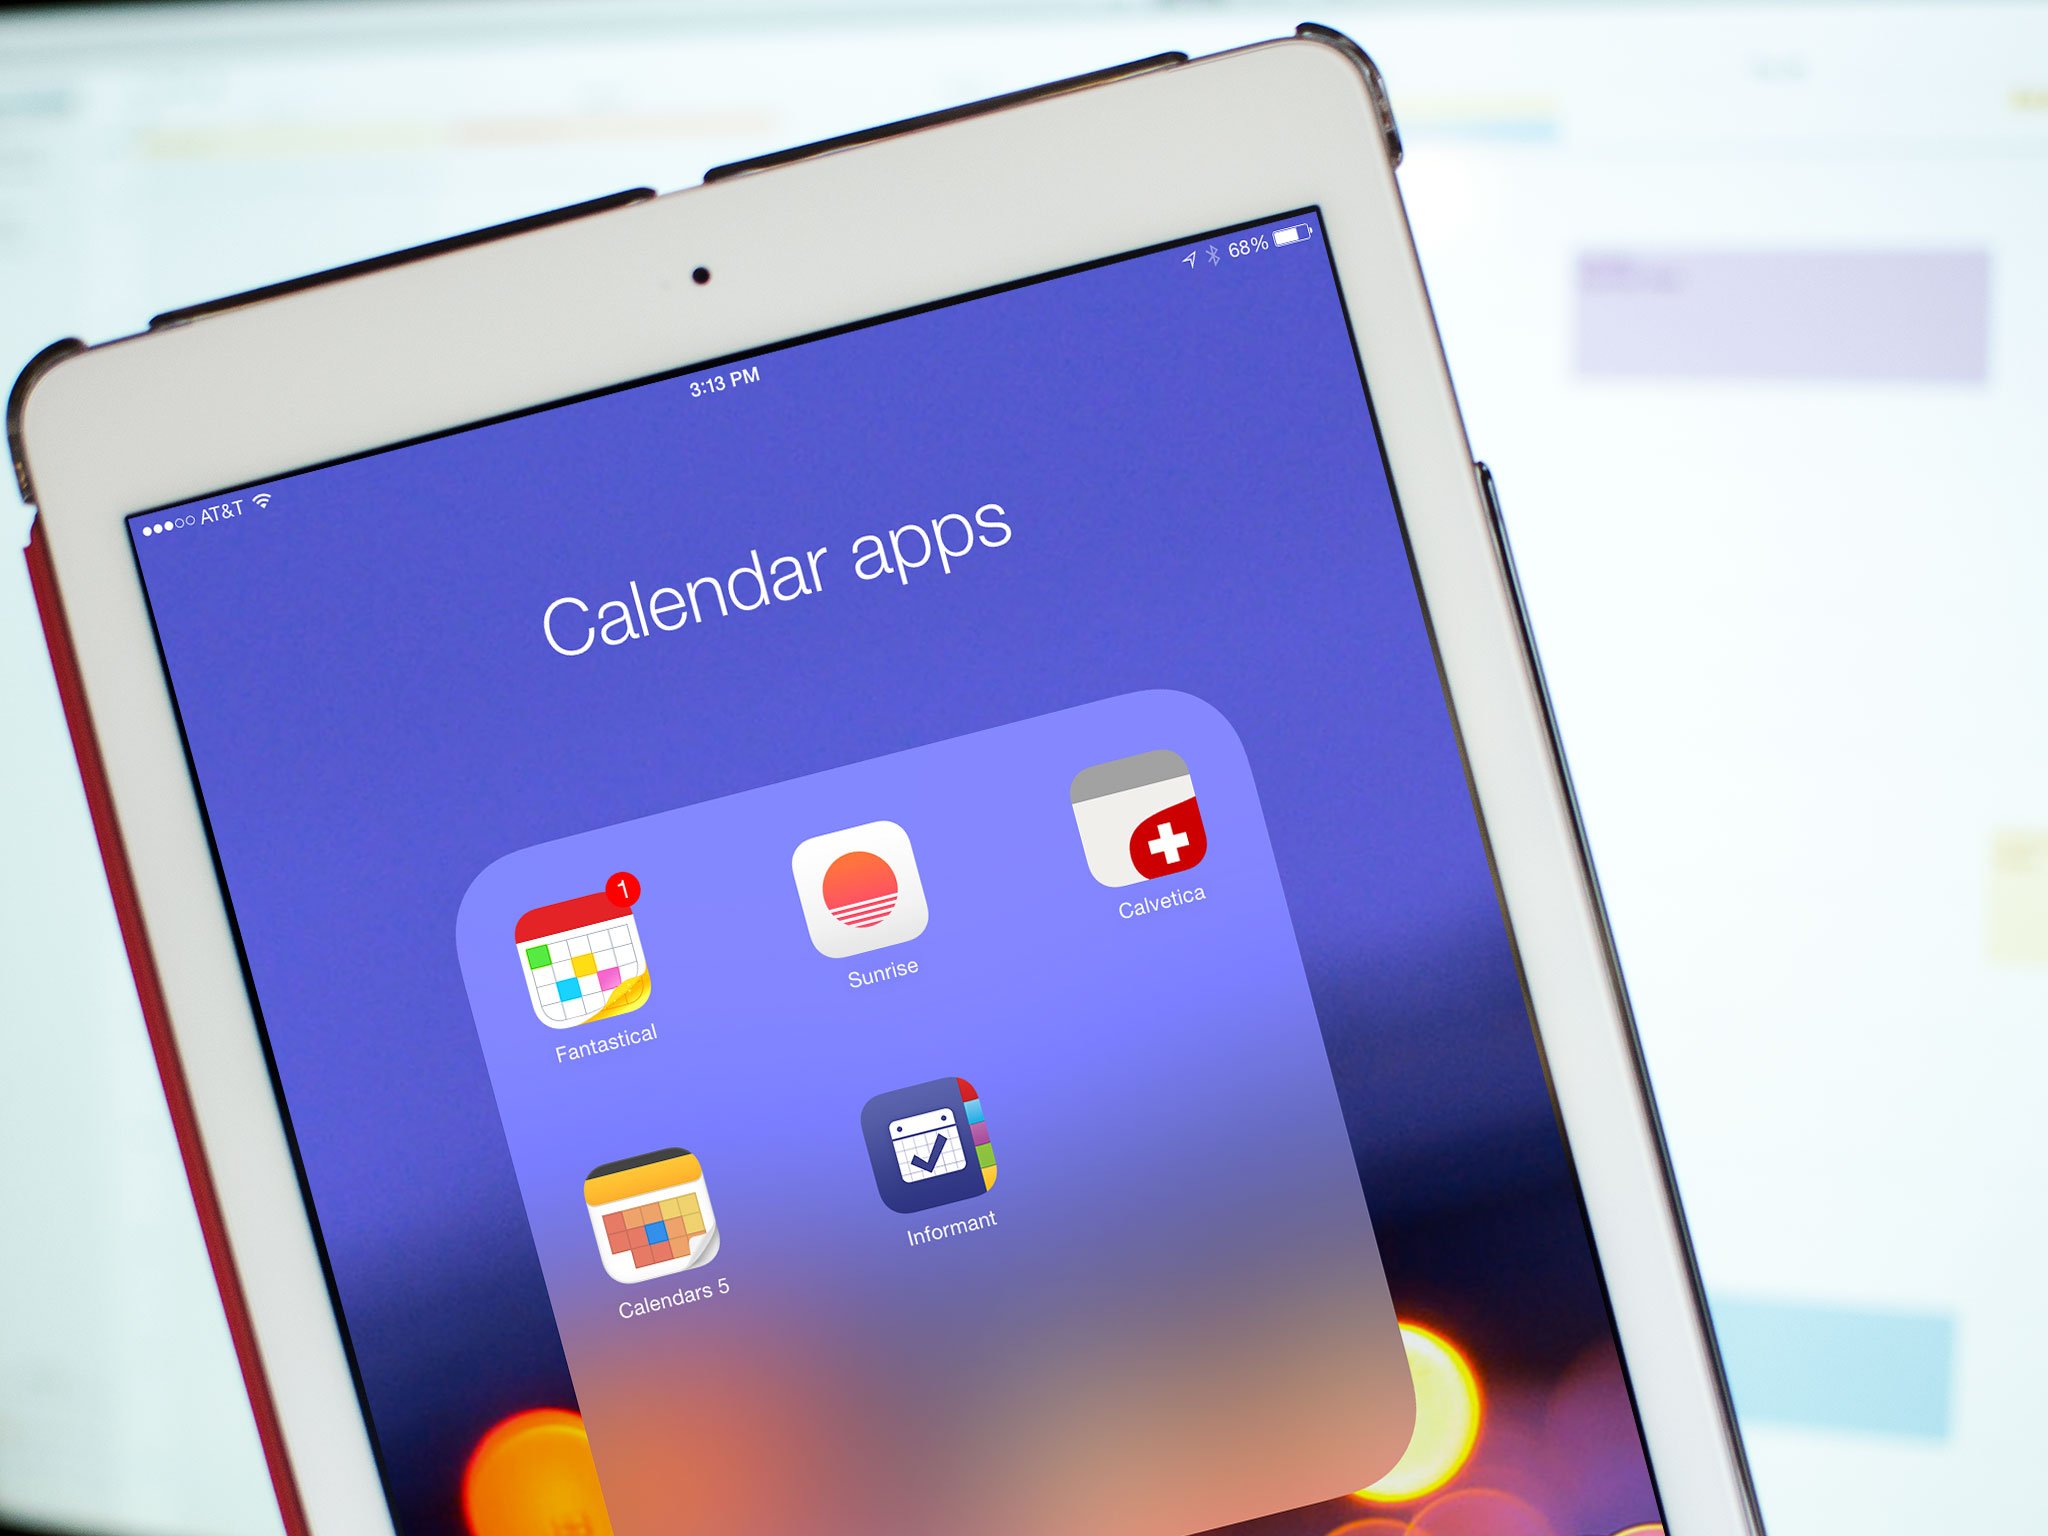 Best alternative calendar apps for iPad: Fantastical 2, Sunrise, Calendars 5, and more!